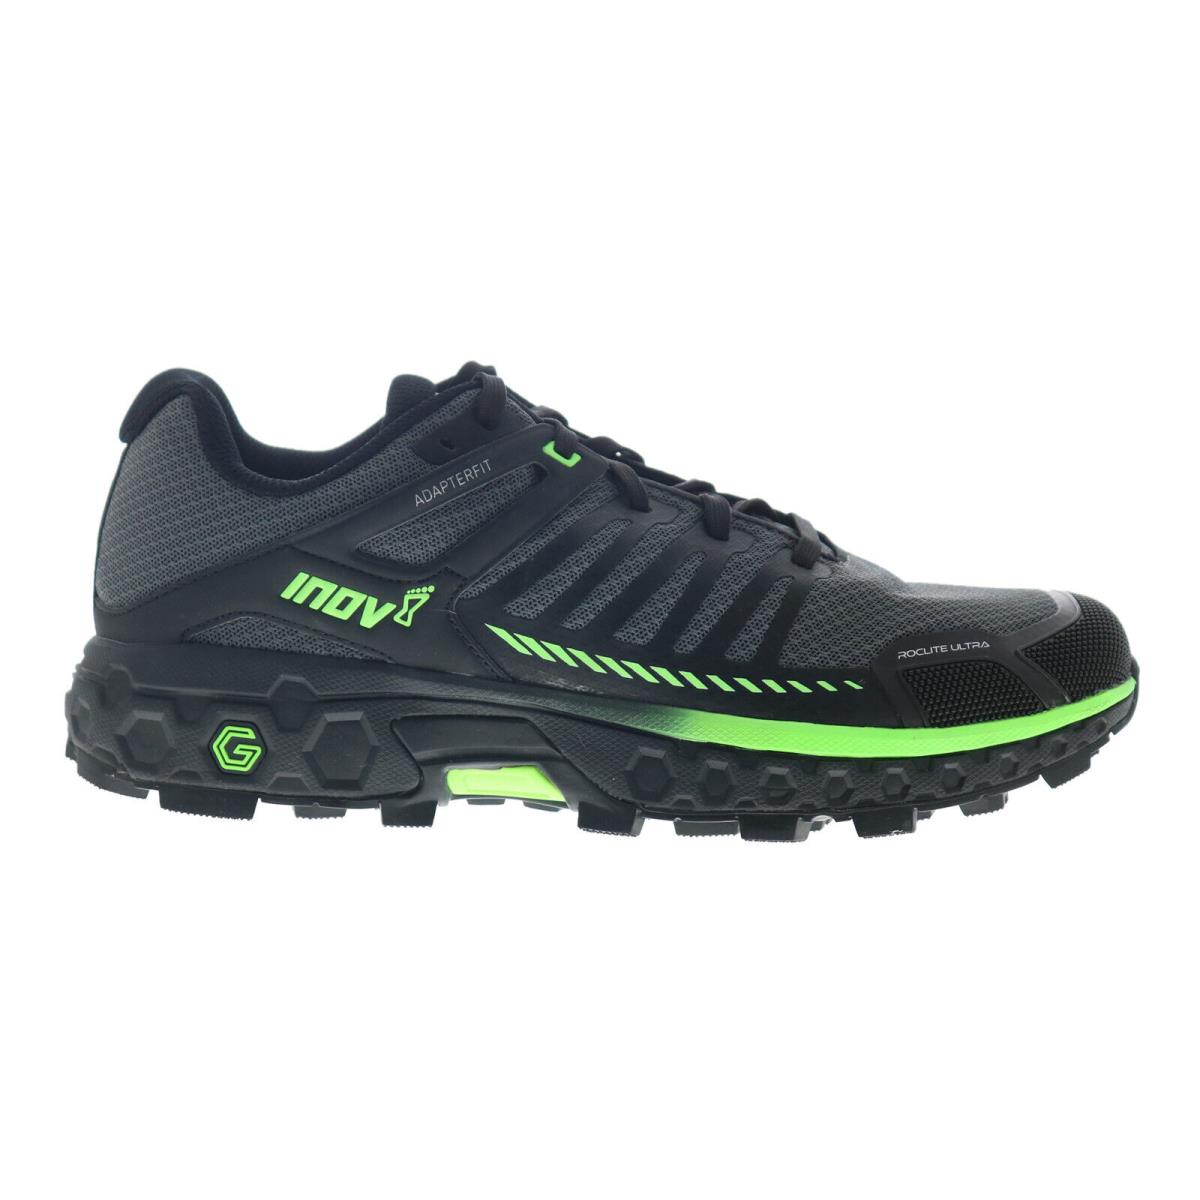 Inov-8 Roclite Ultra G 320 001079-BKGR Mens Black Athletic Hiking Shoes 10